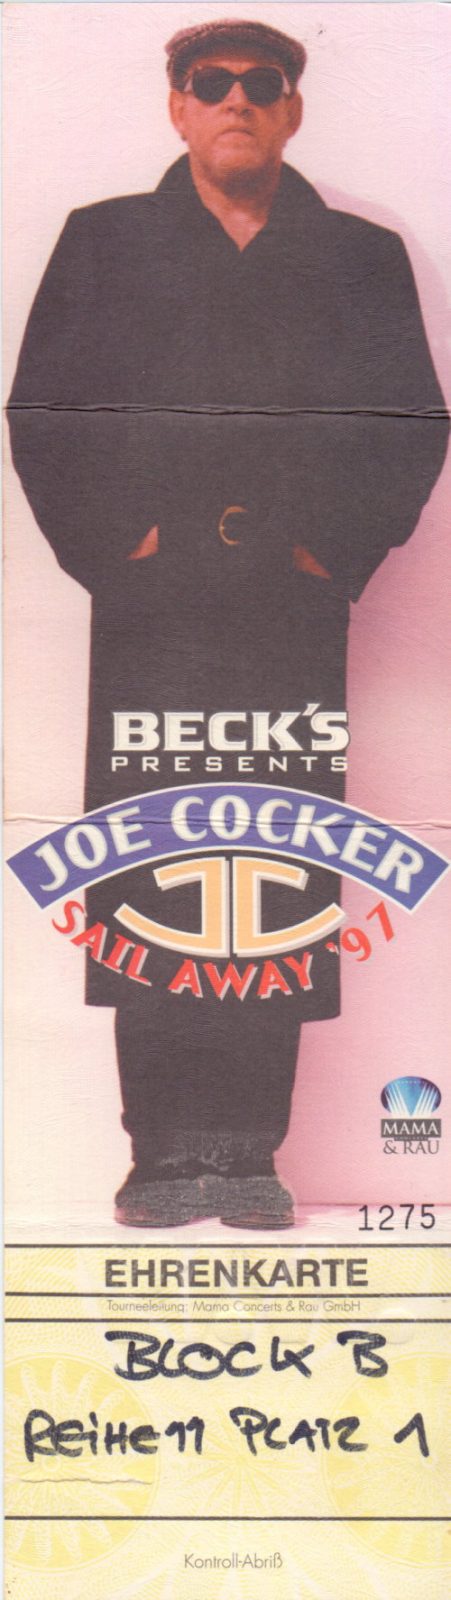 Joe Cocker - Original Tour-Ticket